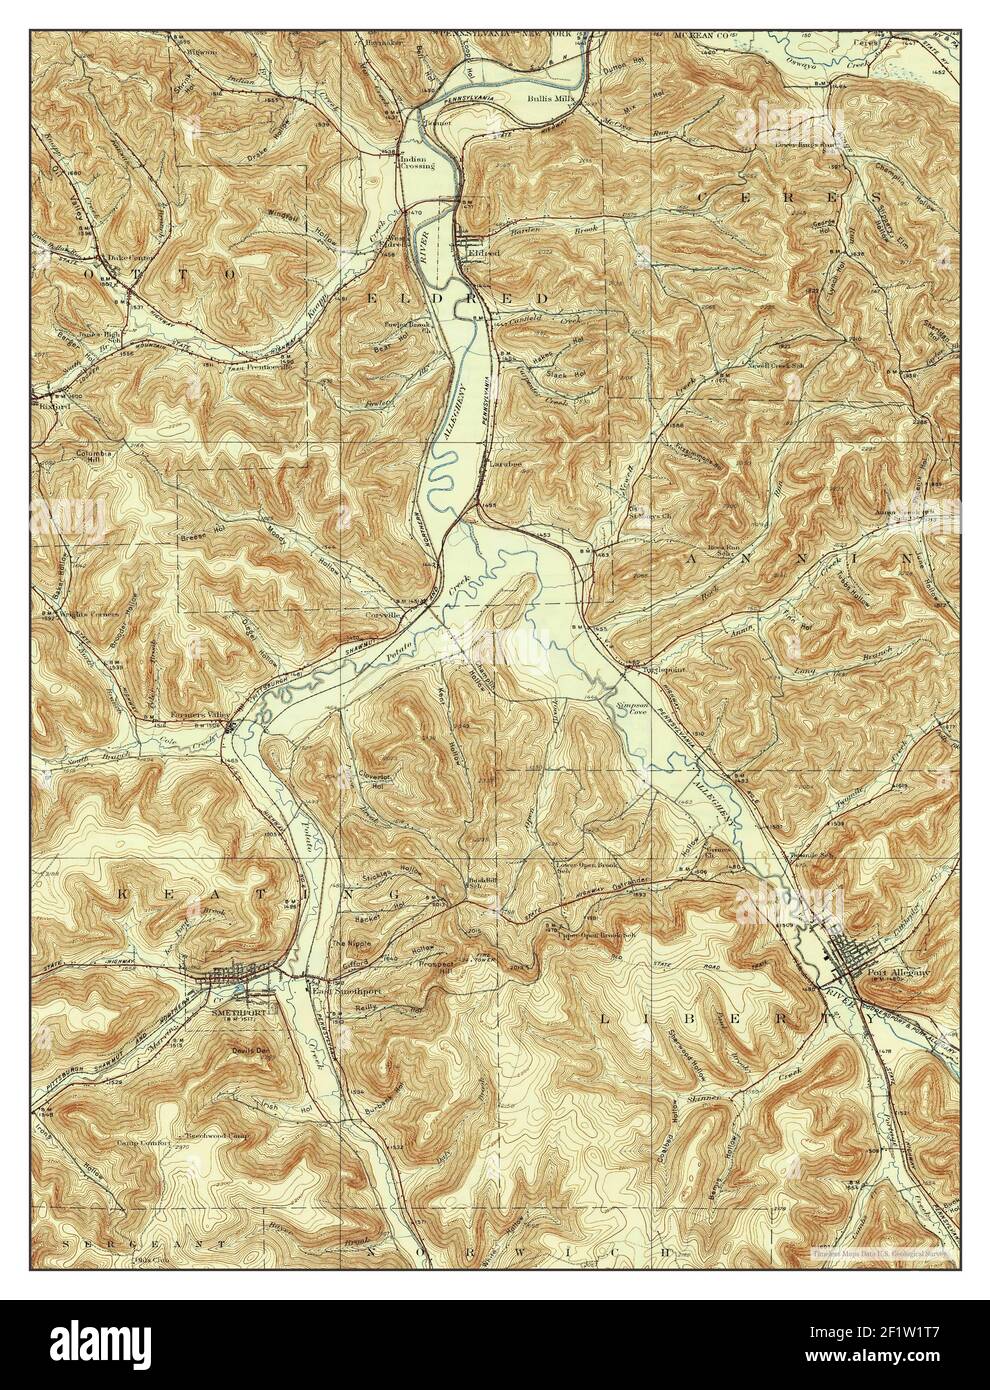 Smethport, Pennsylvania, map 1937, 1:62500, United States of America by Timeless Maps, data U.S. Geological Survey Stock Photo